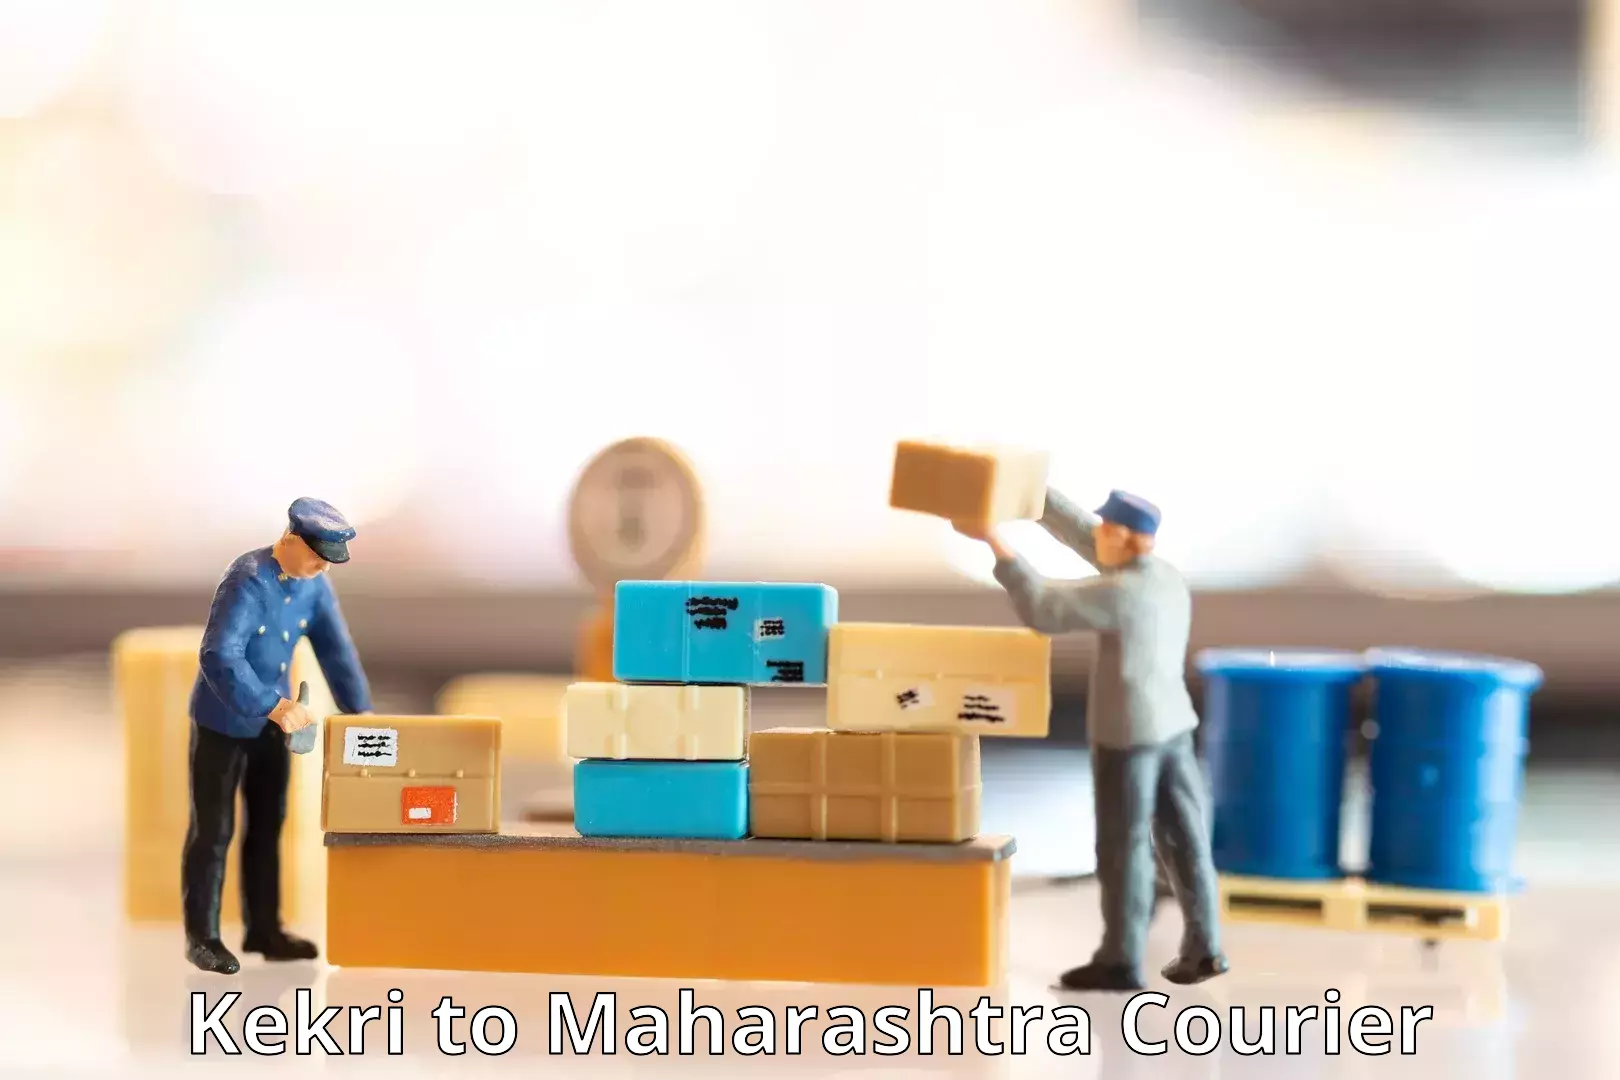 Efficient order fulfillment Kekri to Maharashtra